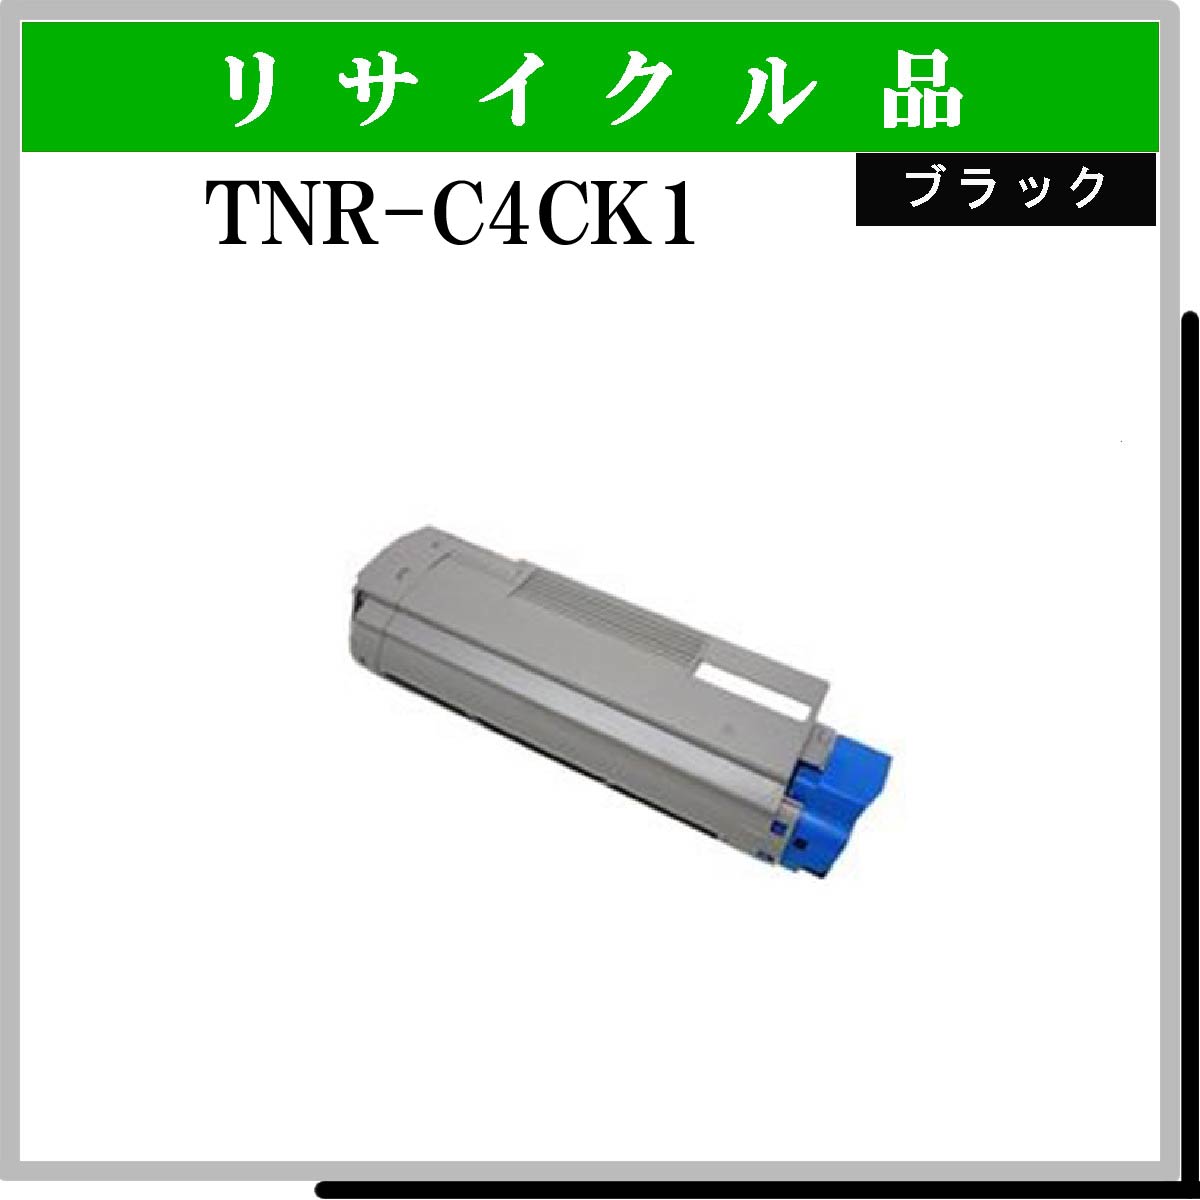 TNR-C4CK1 - ウインドウを閉じる